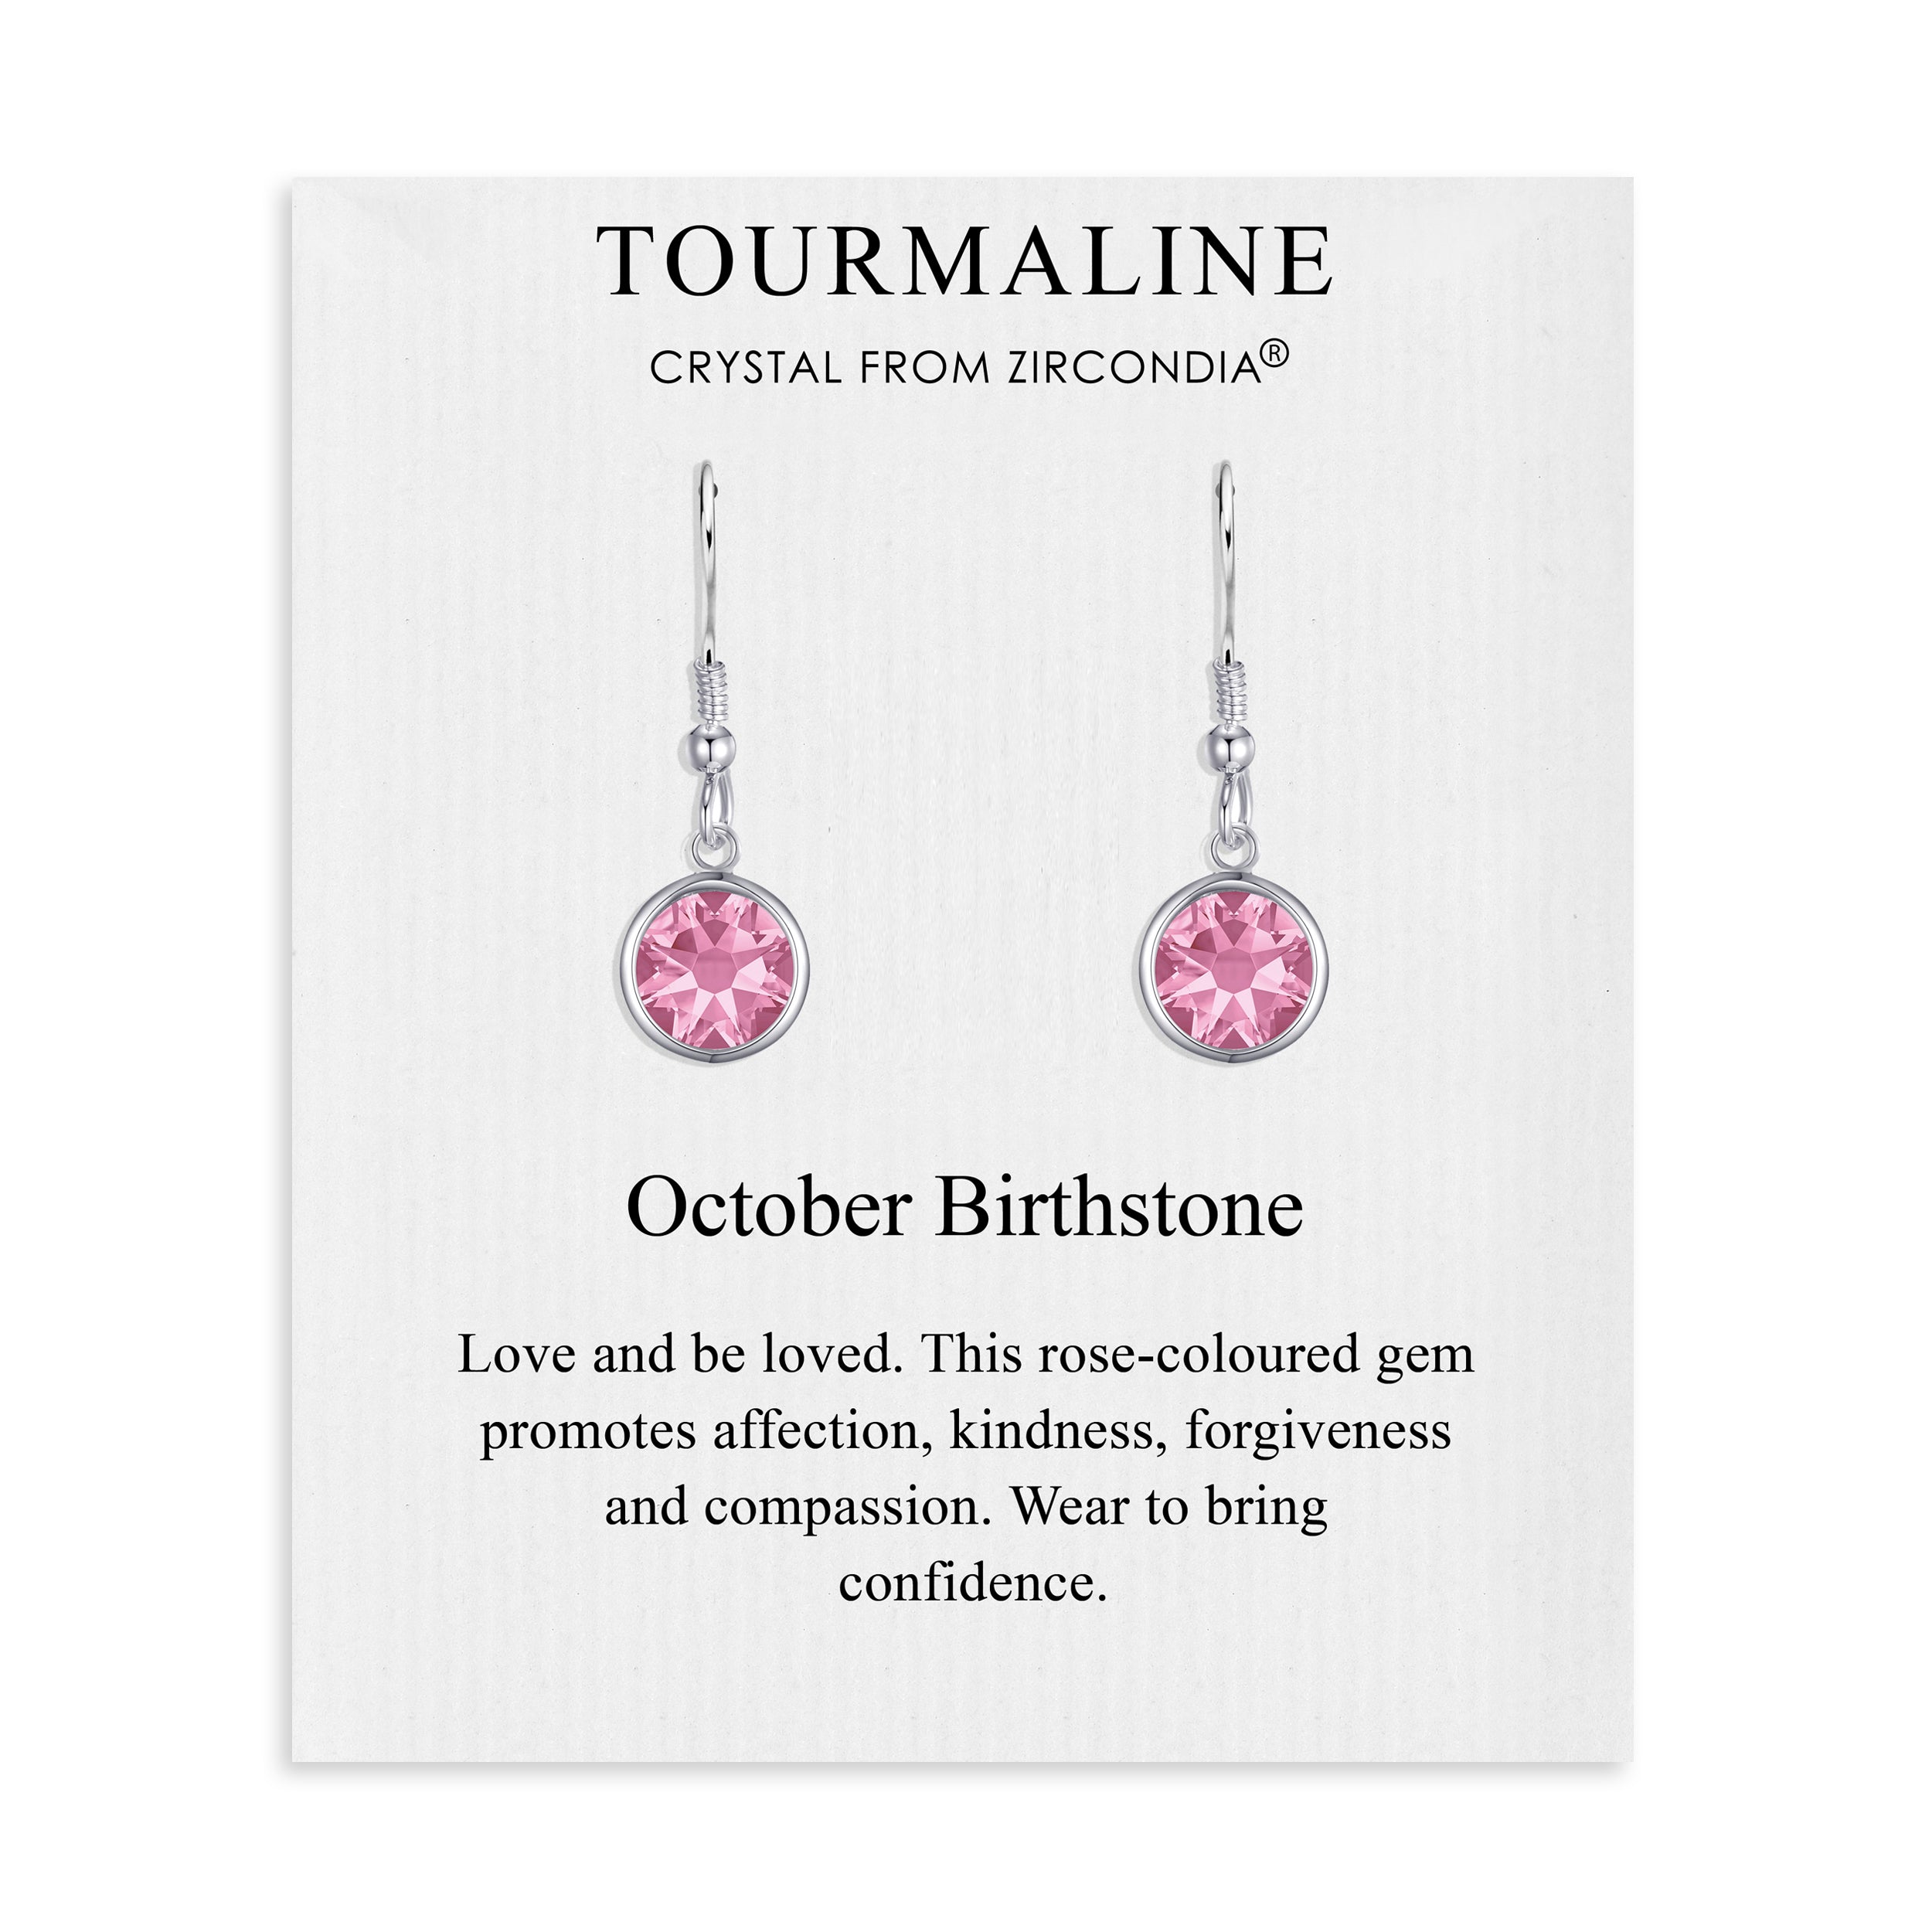 October Birthstone Drop Earrings Created with Tourmaline Zircondia® Crystals by Philip Jones Jewellery